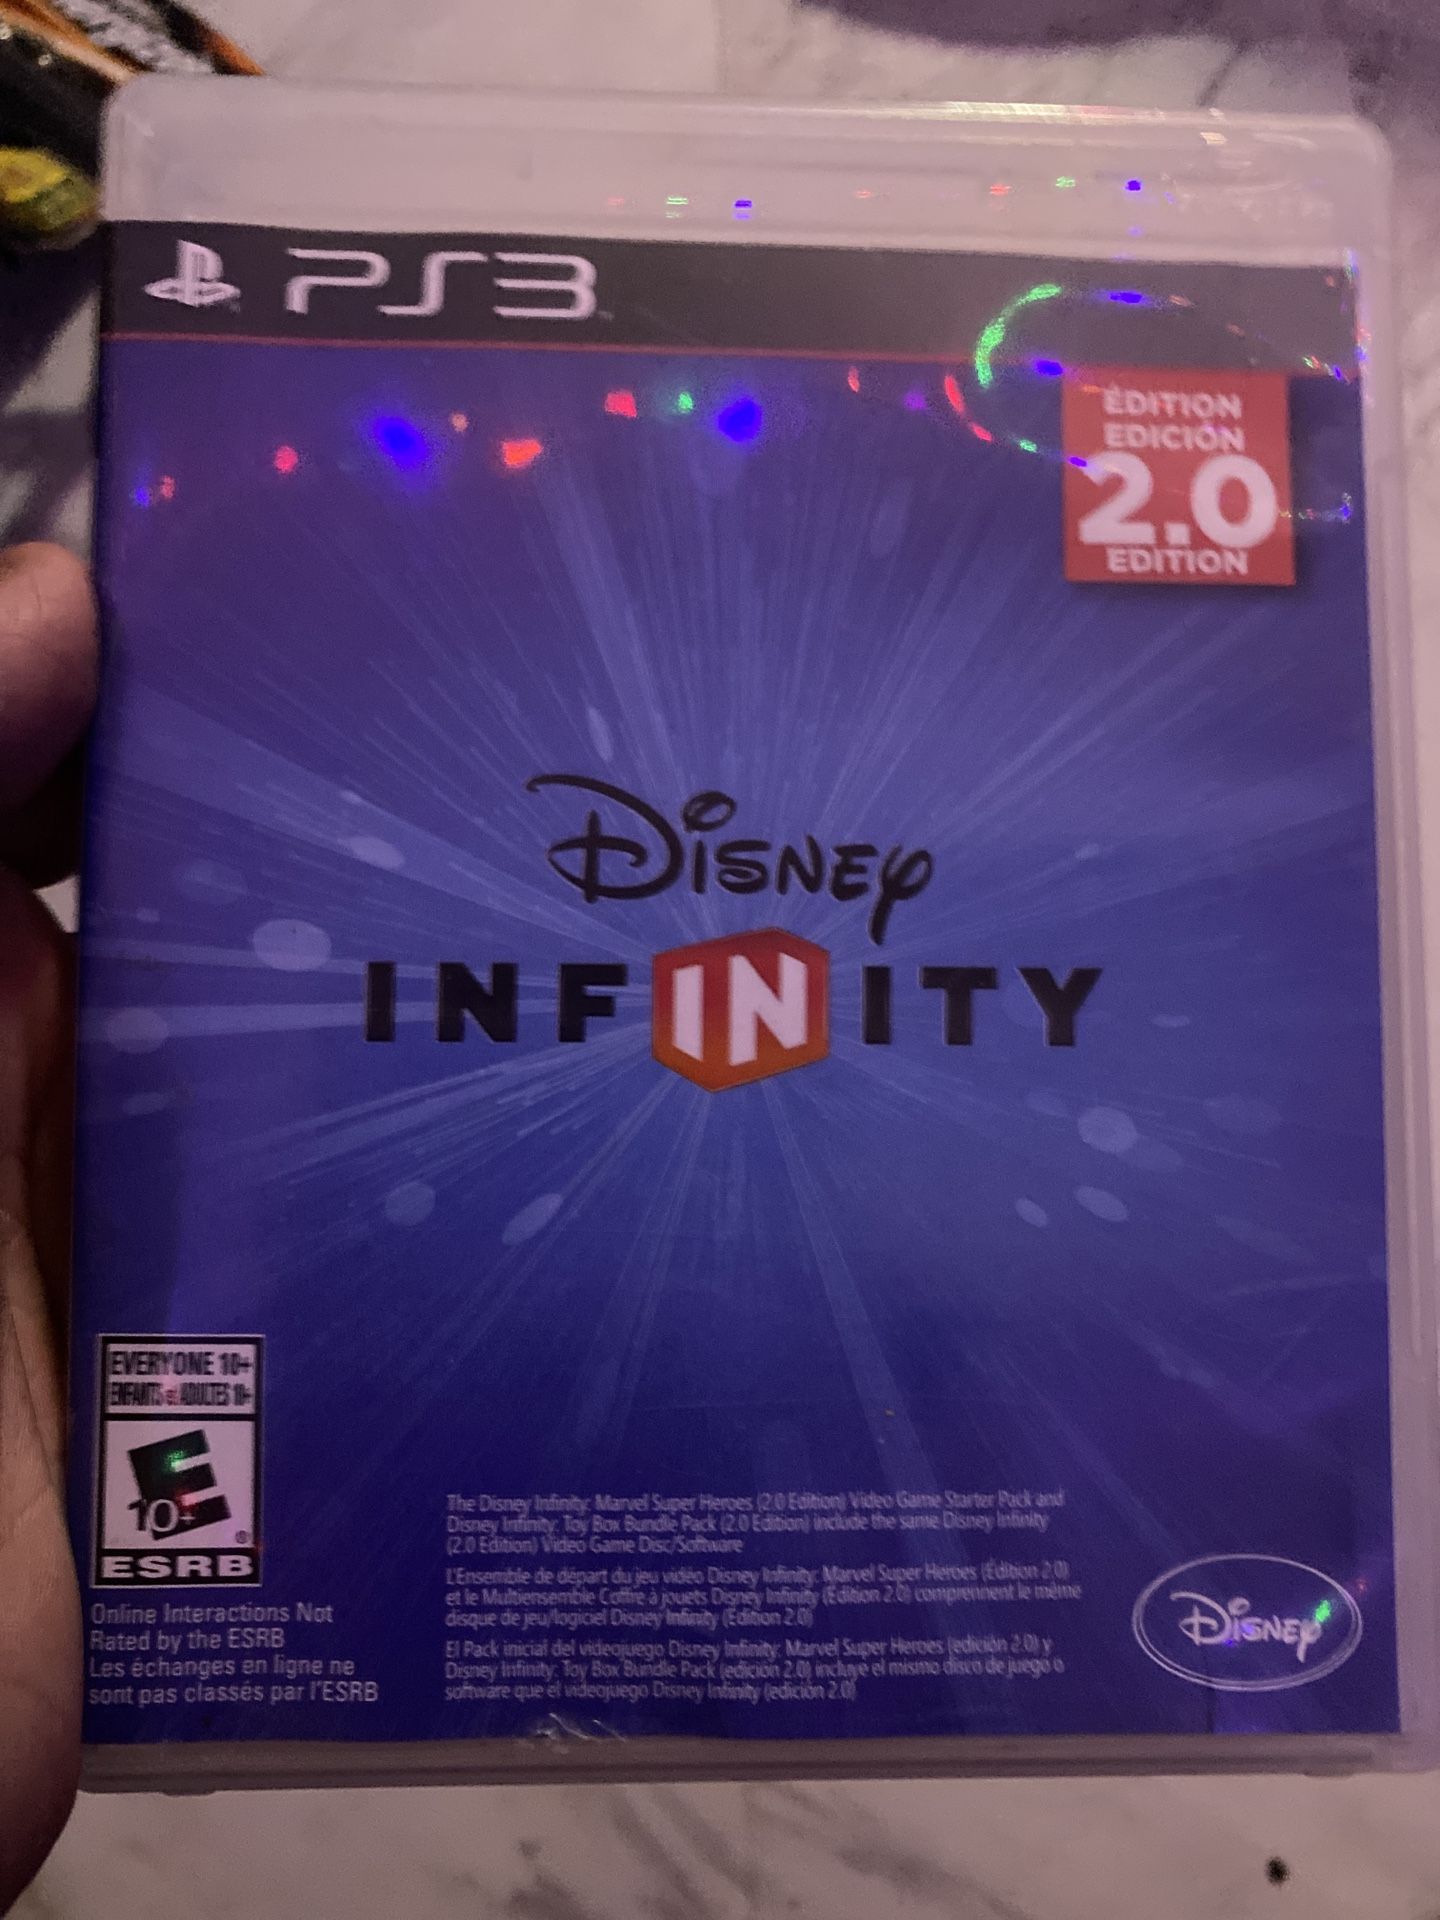 Disney Infinity (PS3 GAME)